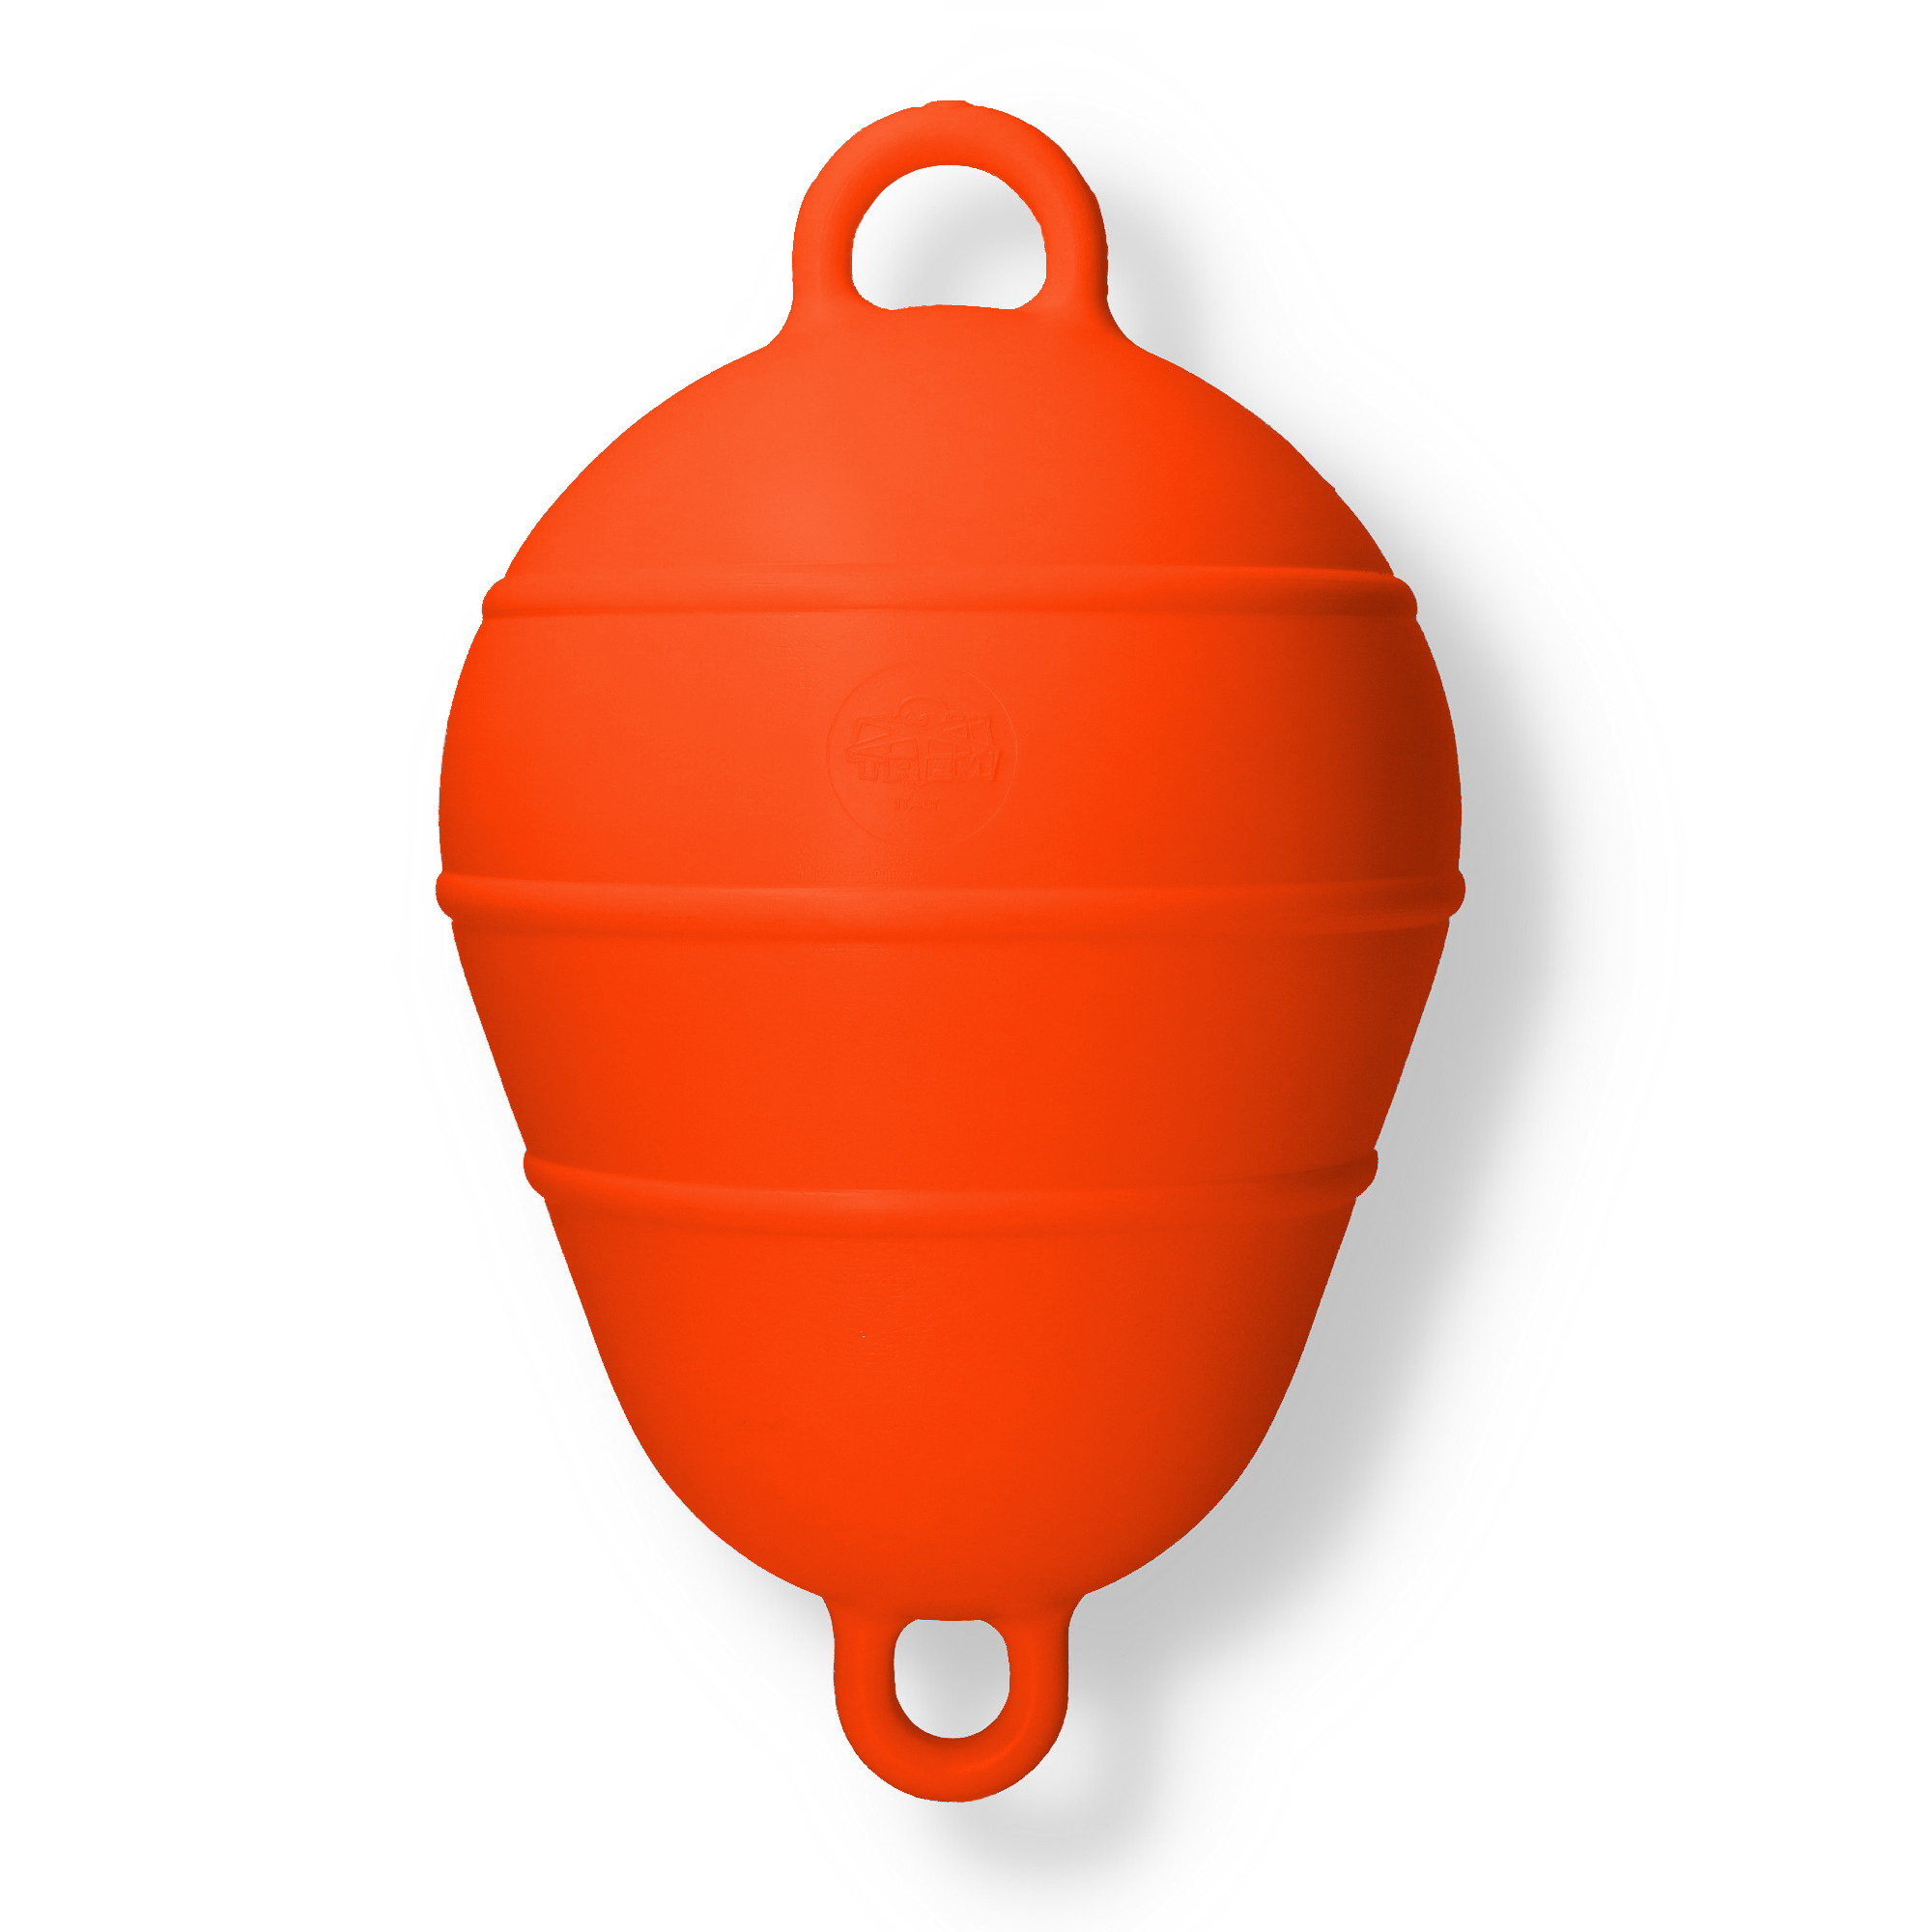 Boje oval | Festmacherboje | Ankerboje | Markierungsboje | Volumen: 9,5 Liter | Farbe: orange